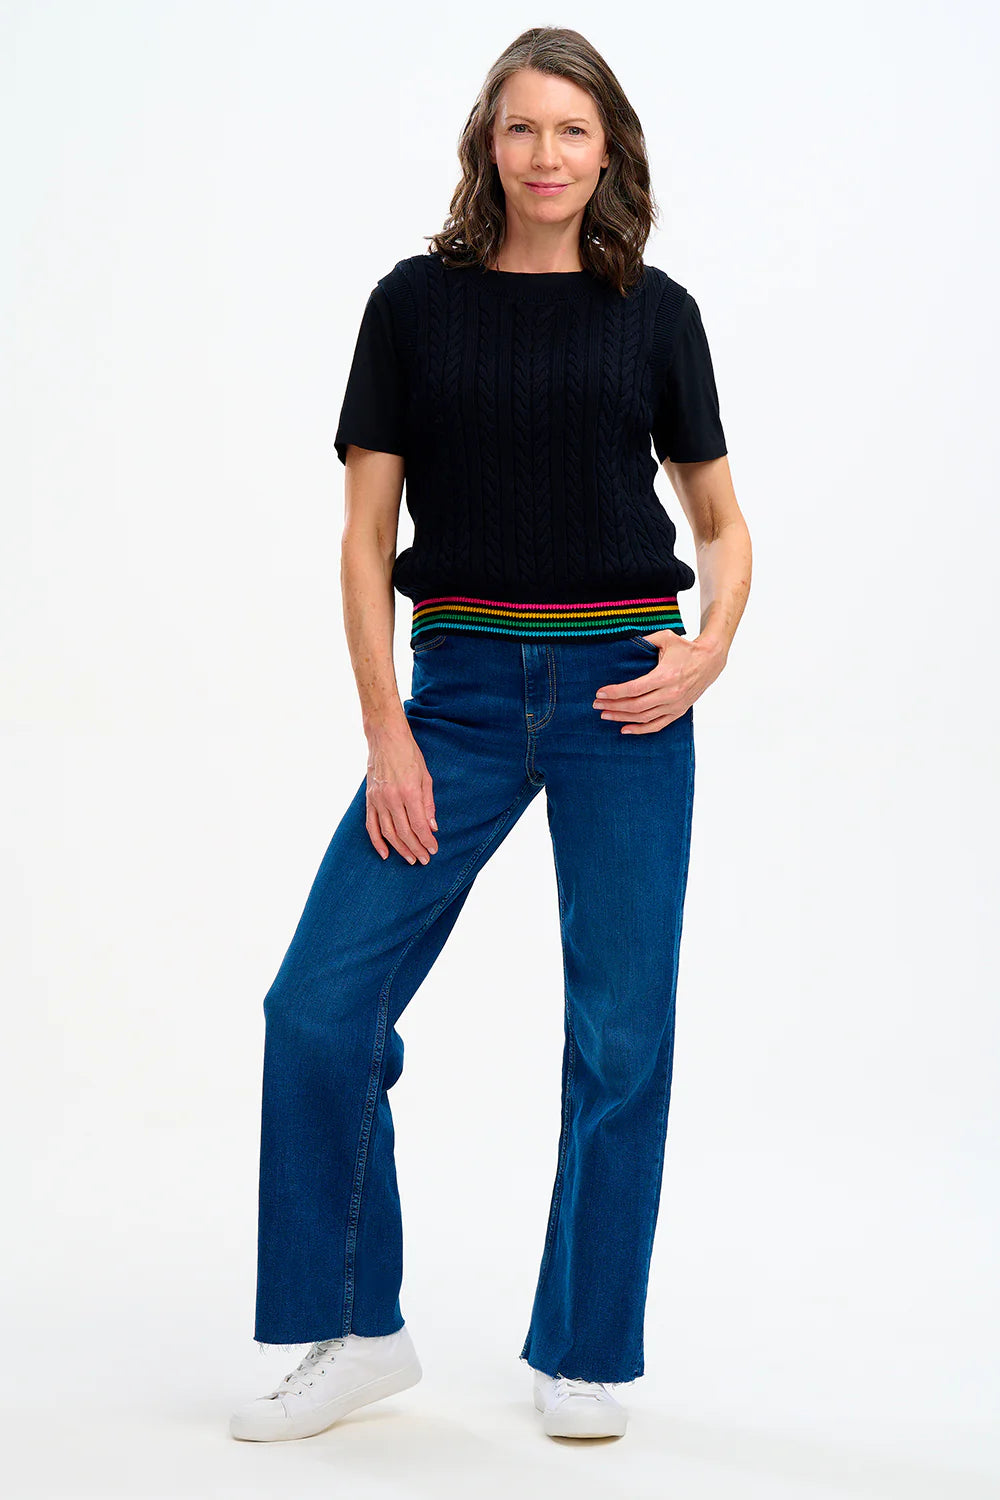 SUGARHILL BRIGHTON-Myrtle Cable Knit Vest - Black, Rainbow Tipping